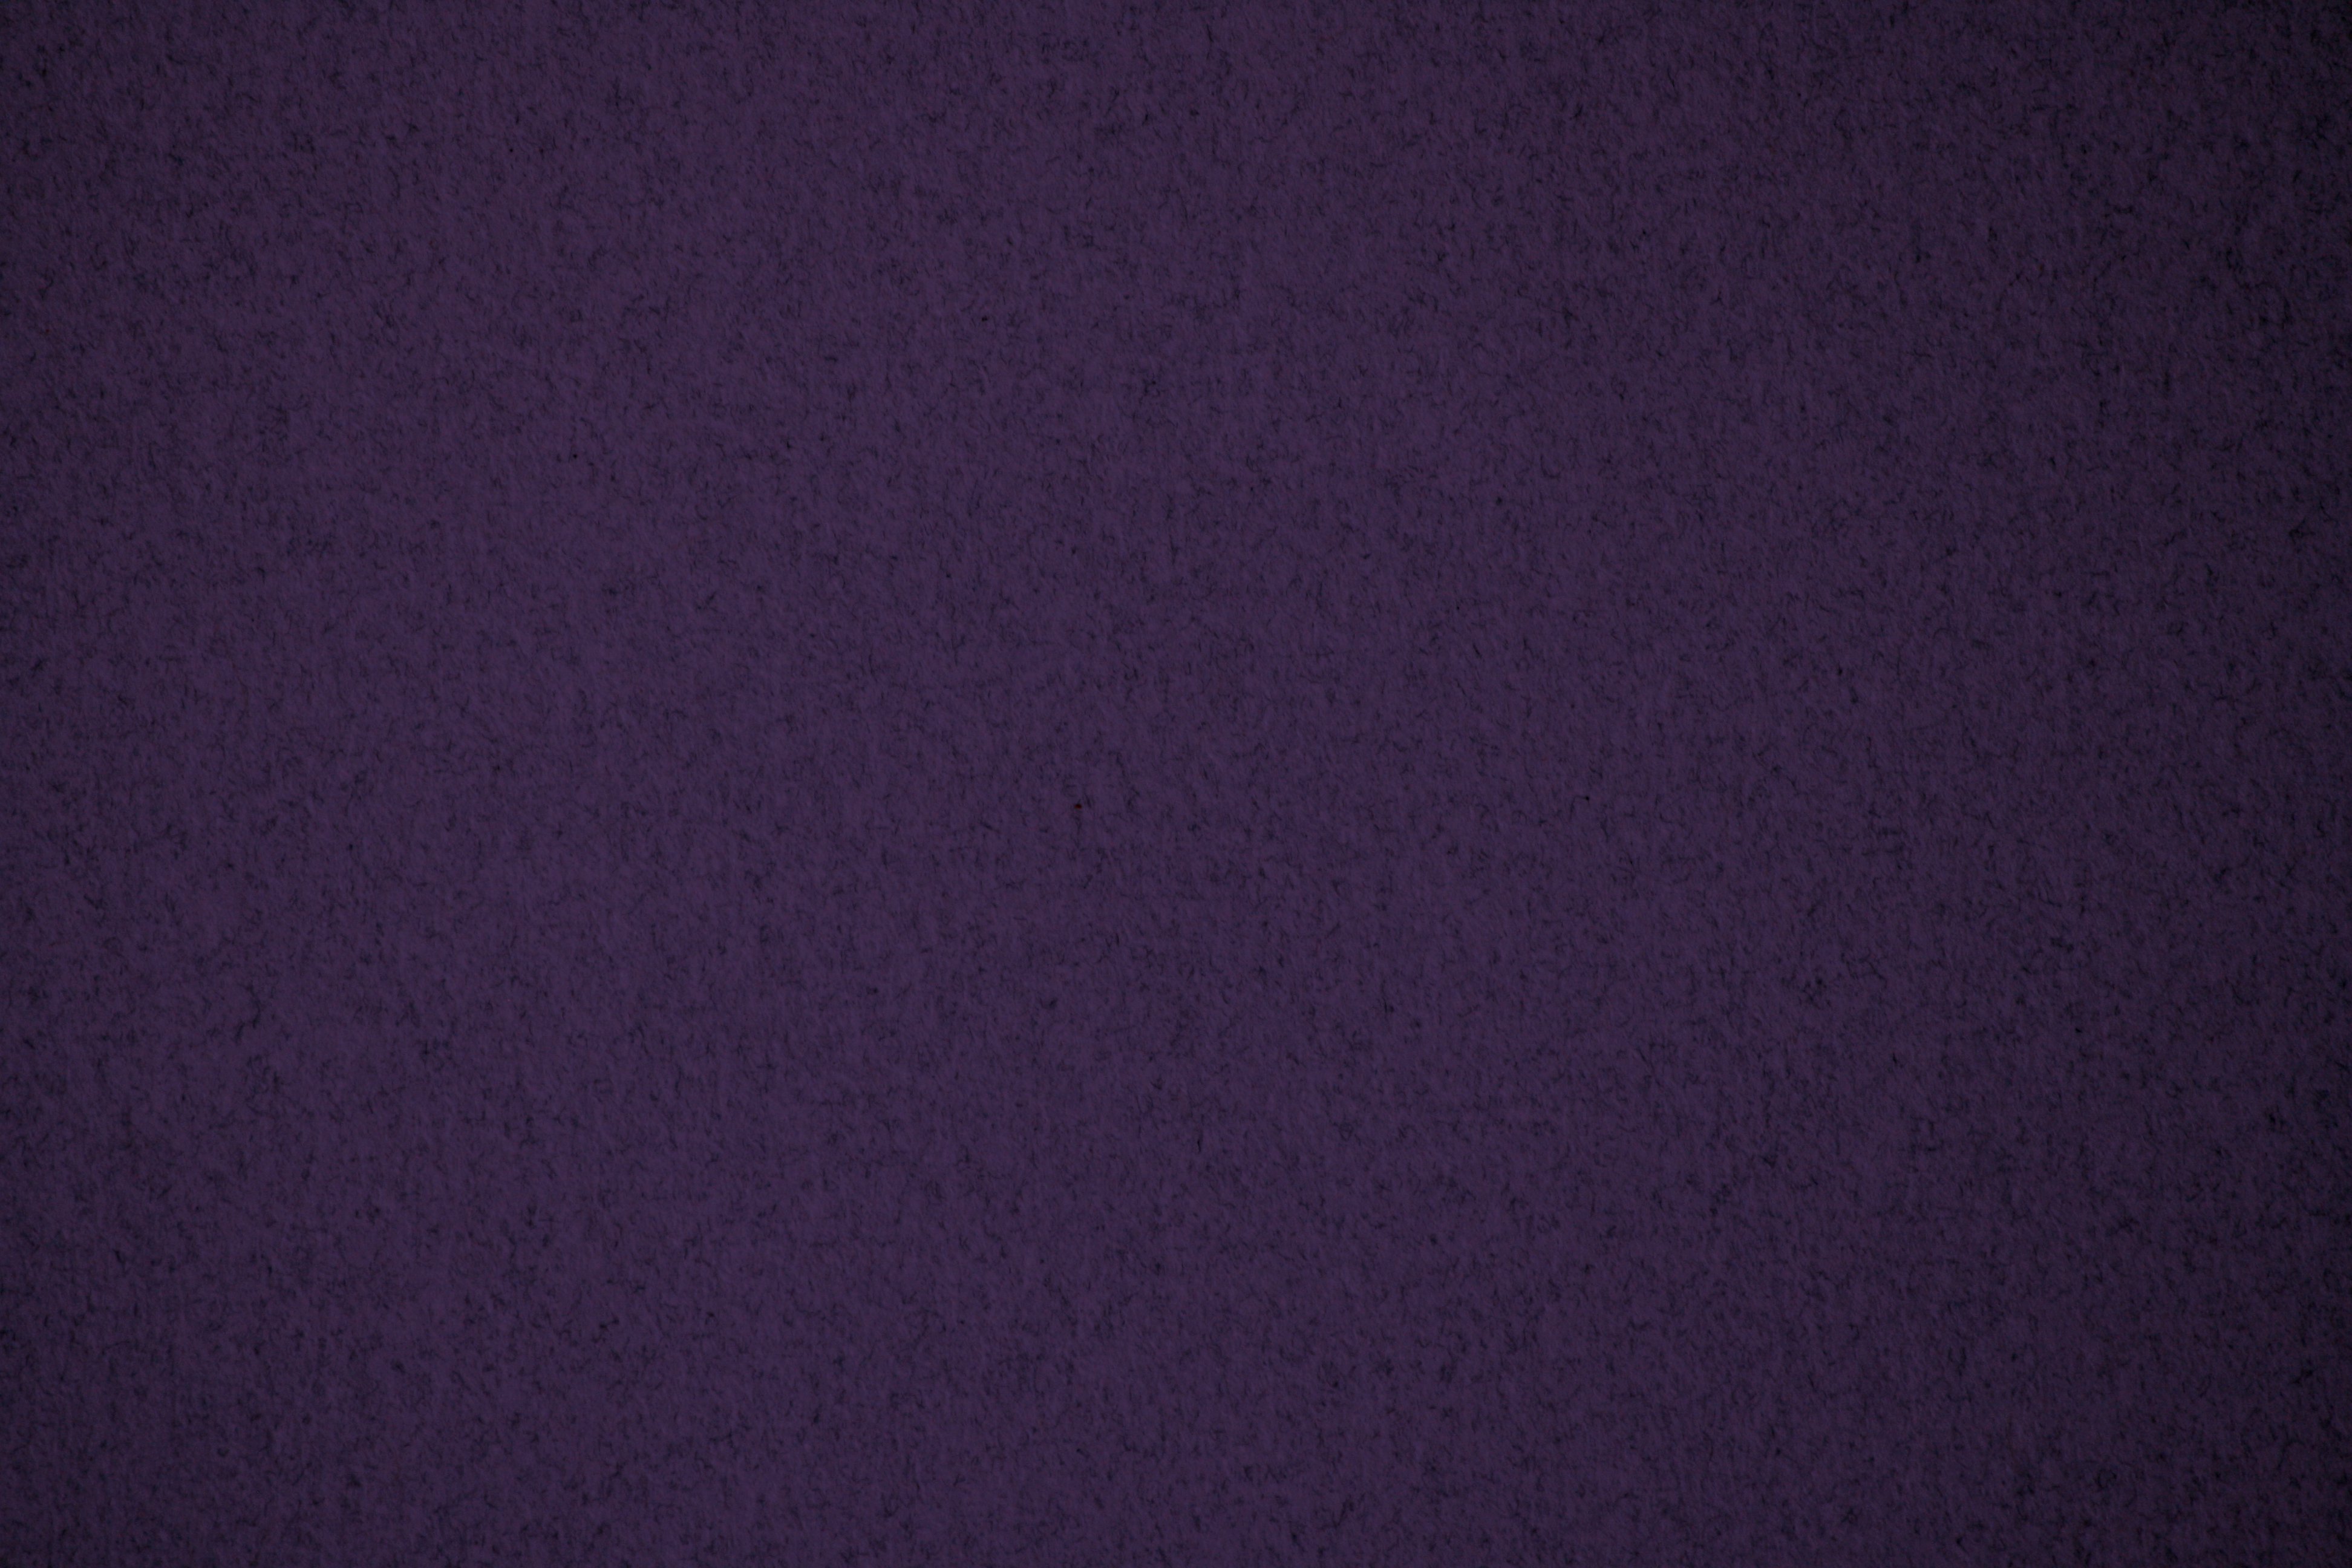 Dark Purple Background Image Amp Pictures Becuo